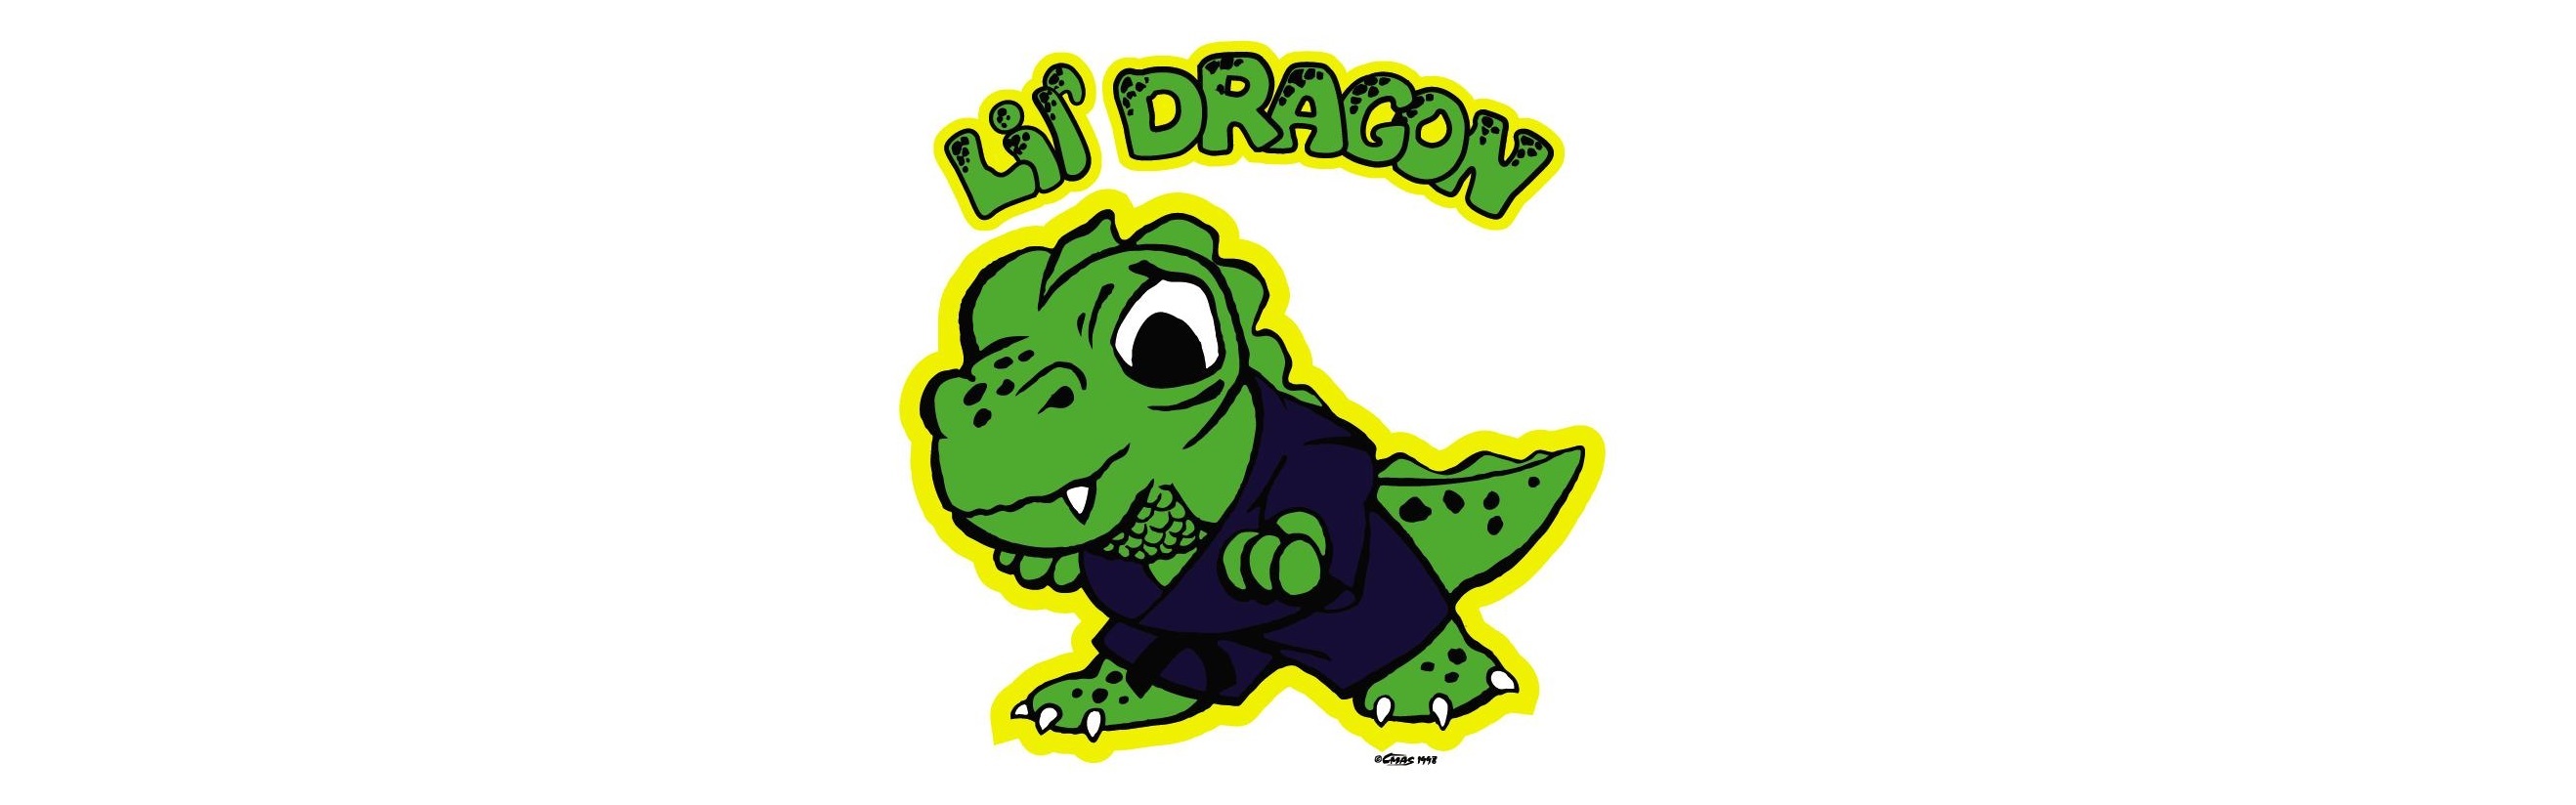 Lil Dragon logo